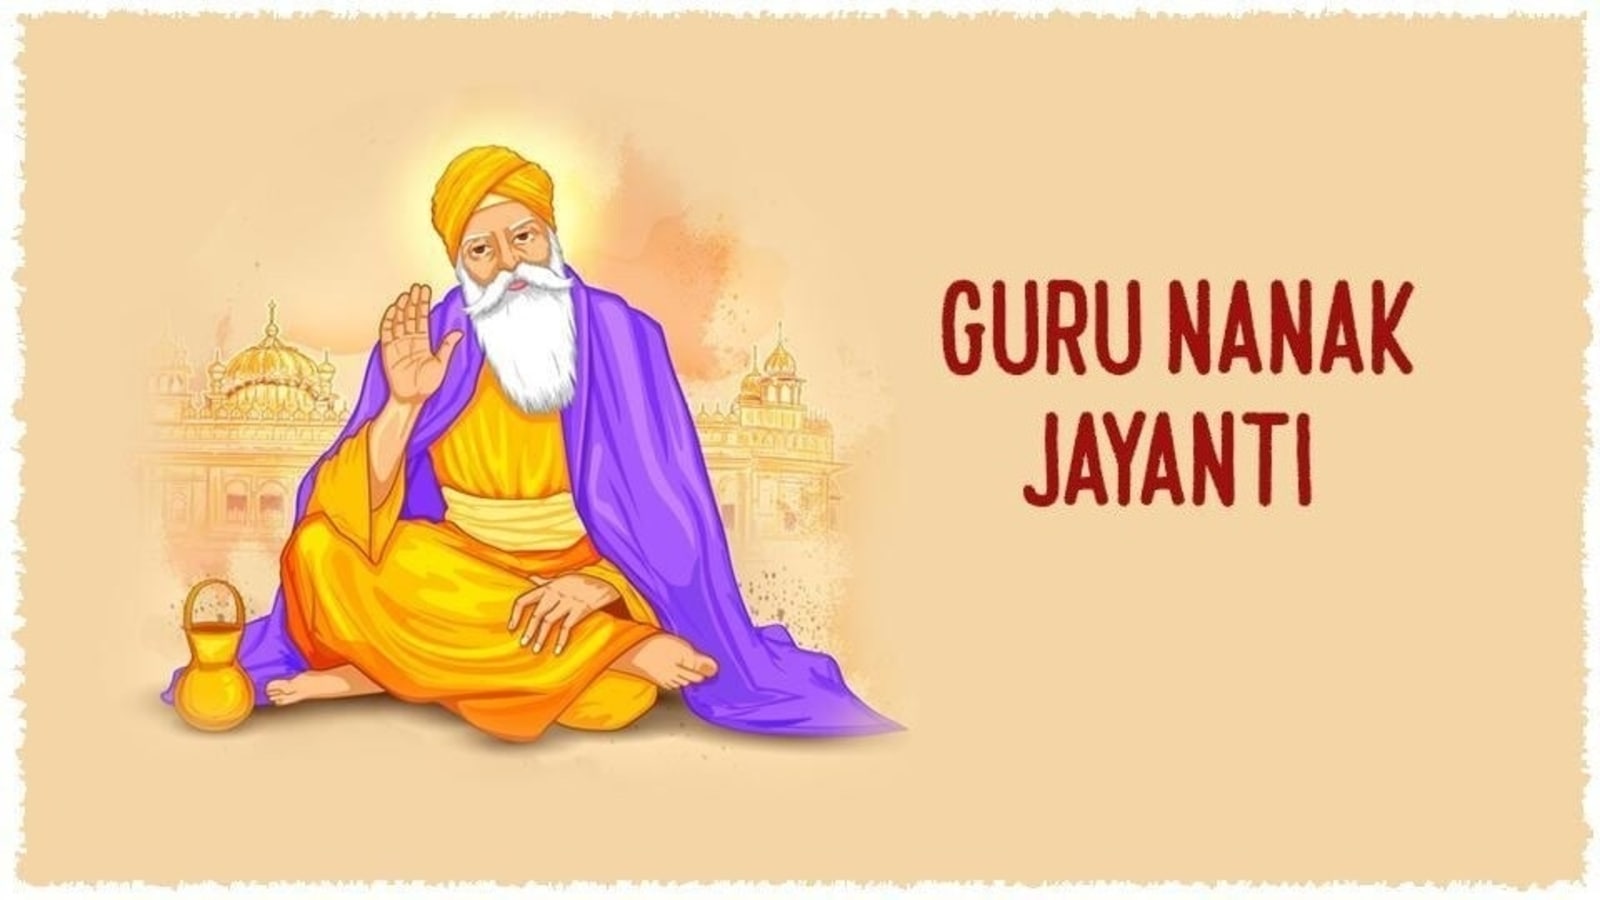 Guru Nanak Jayanti 2022 When is Guru Nanak Jayanti? Date, significance